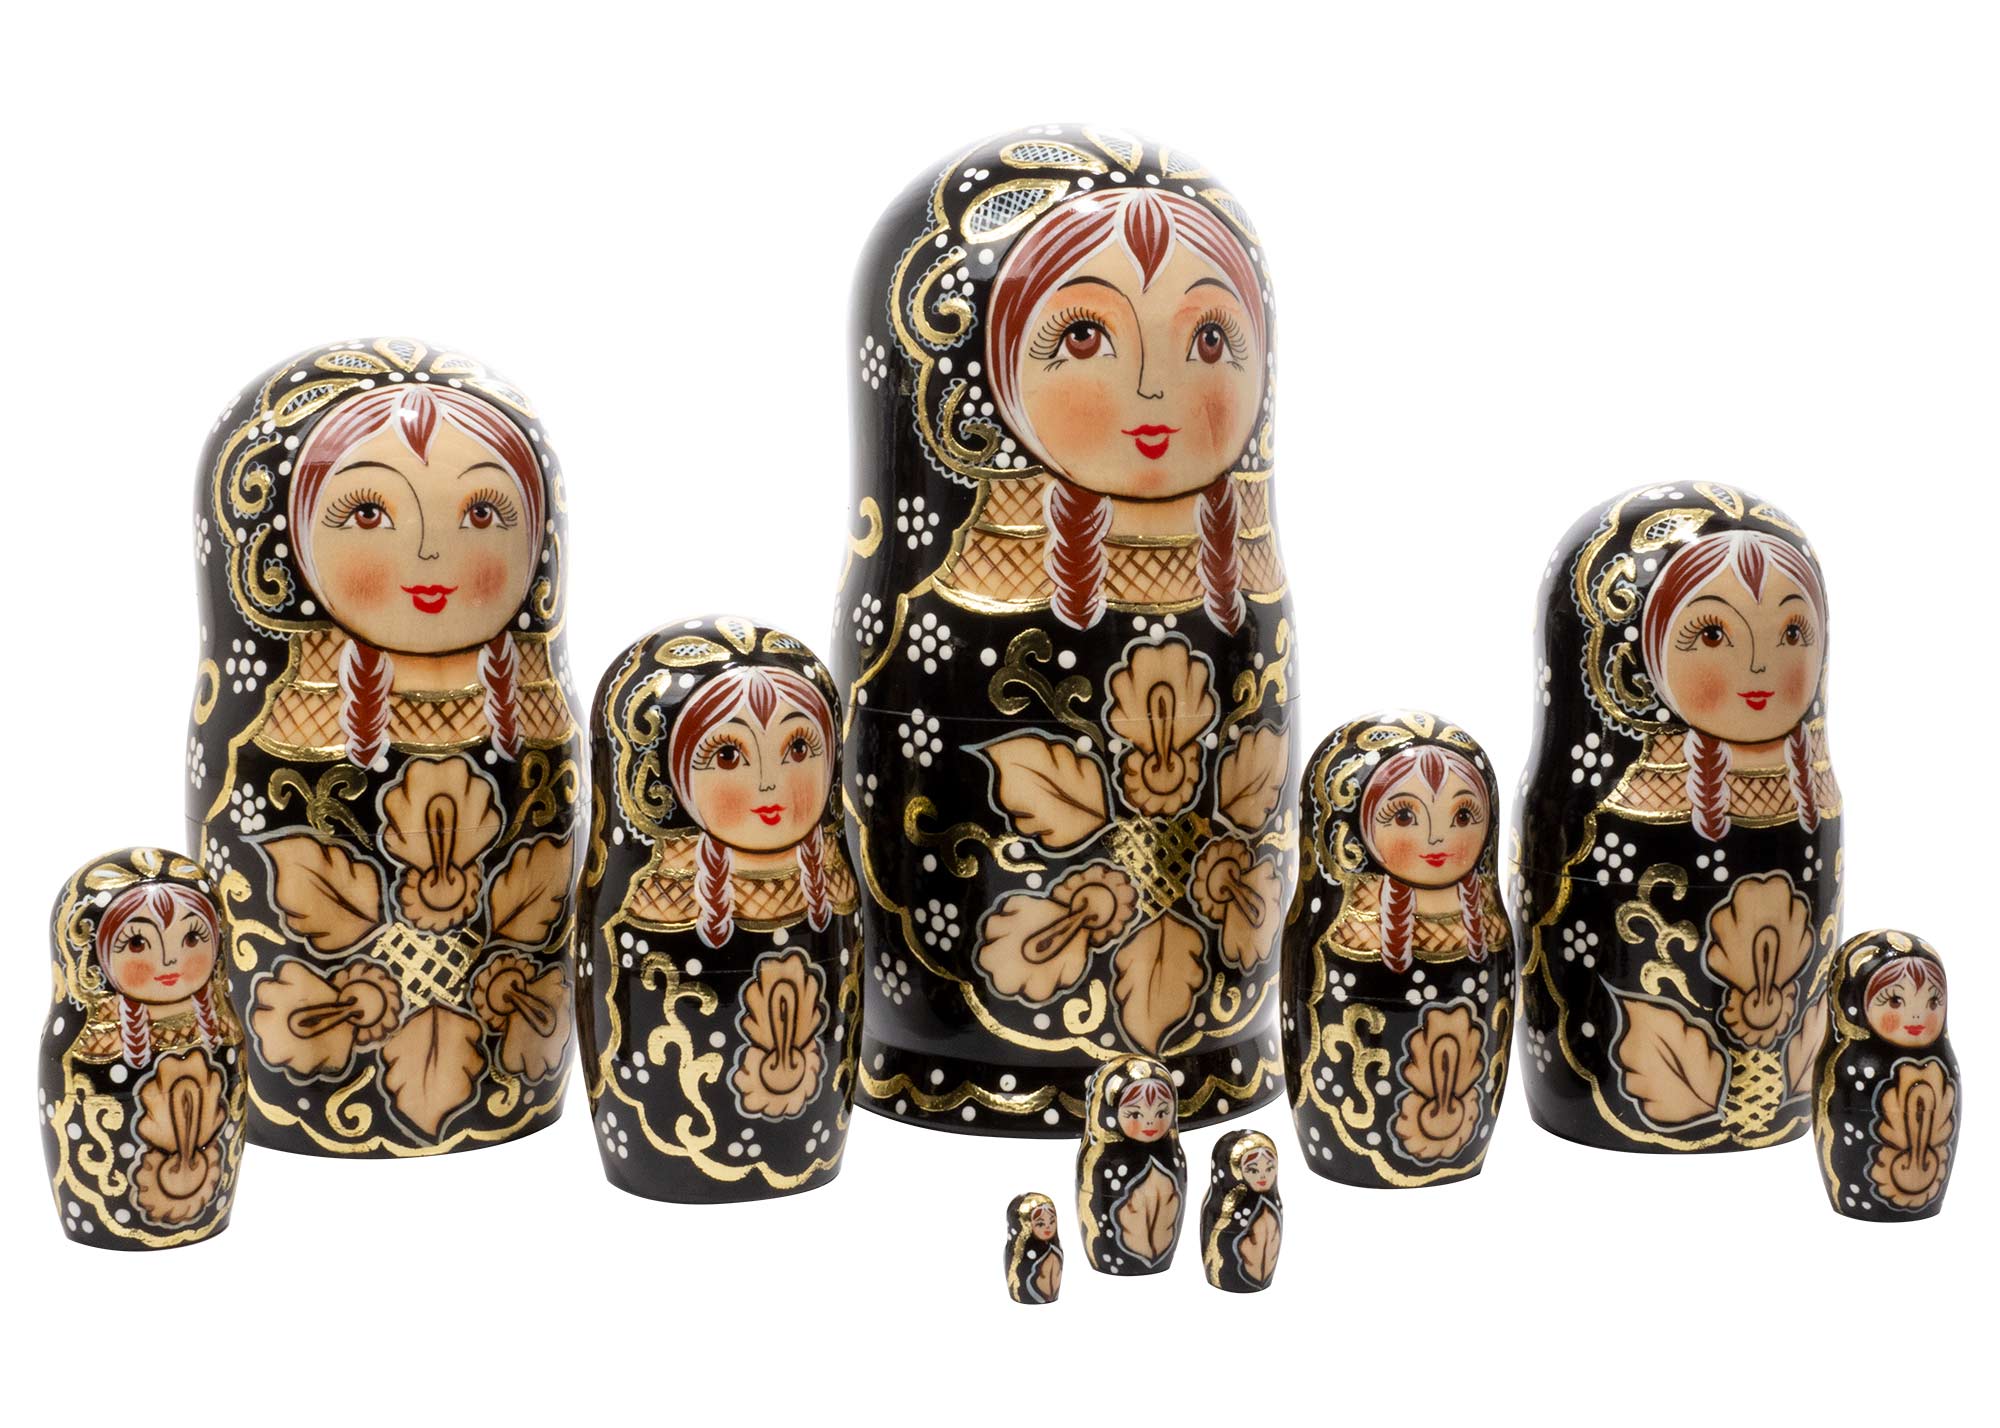 Buy Deluxe Woodburned Matryoshka Doll 10pc./10" at GoldenCockerel.com